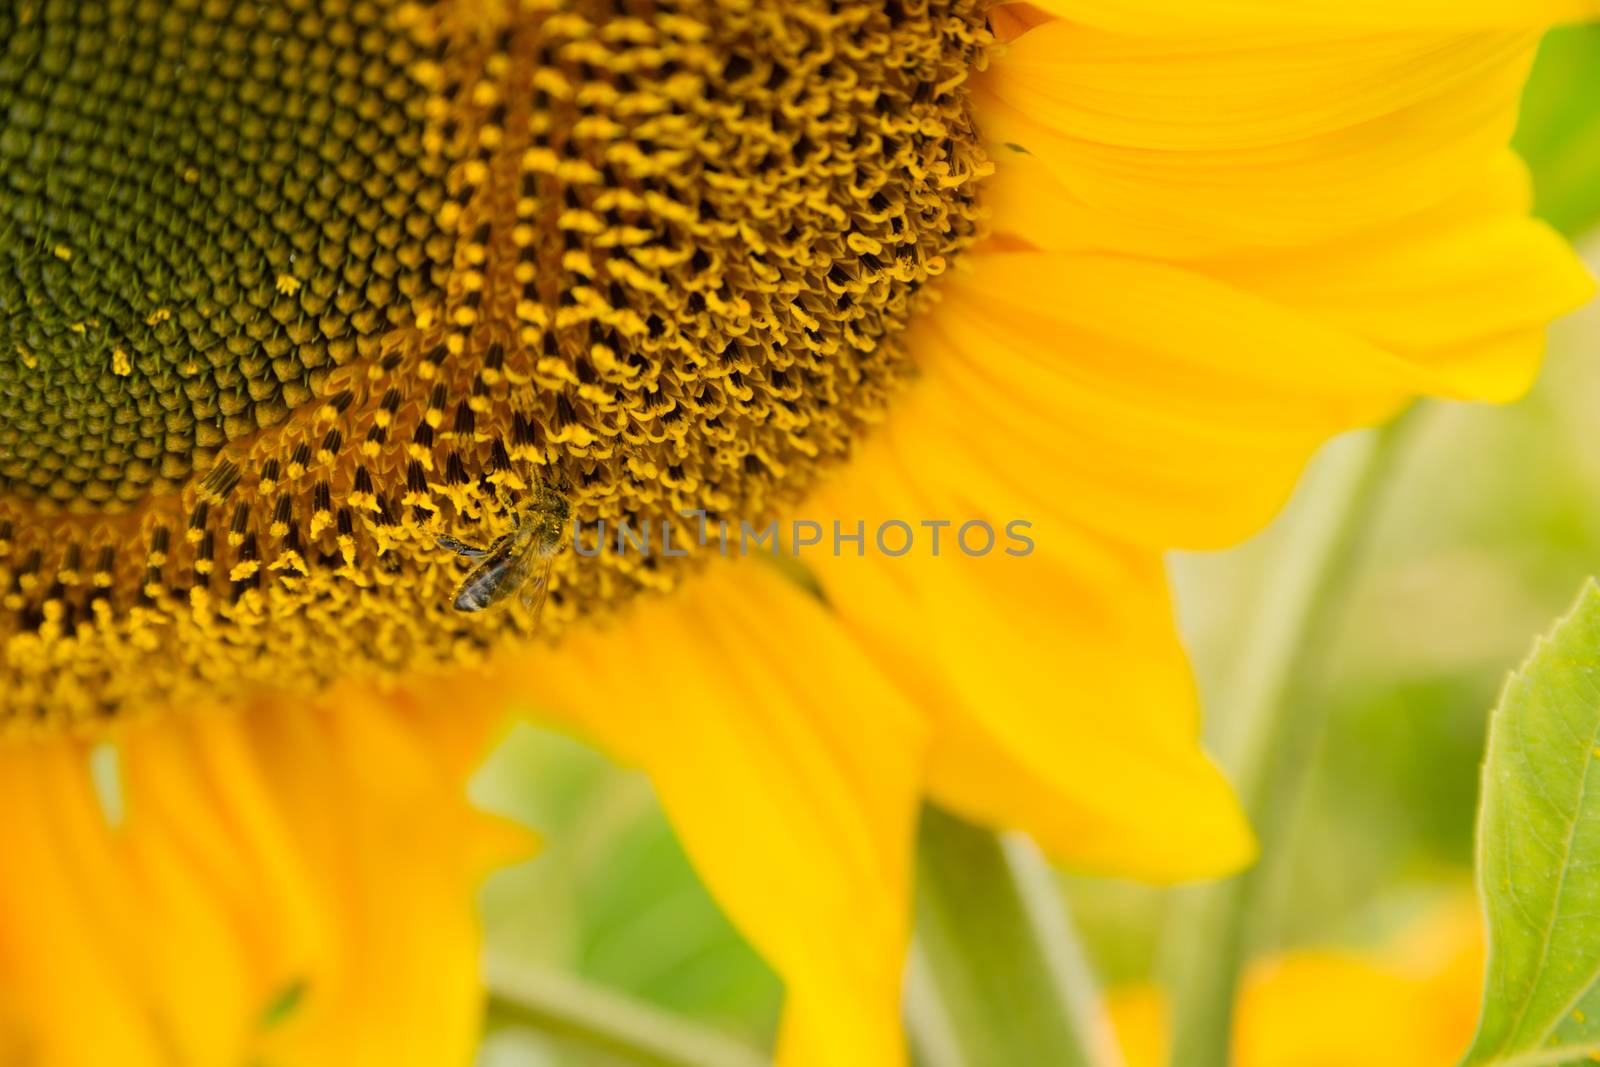 a bee probes around on a big sunflower